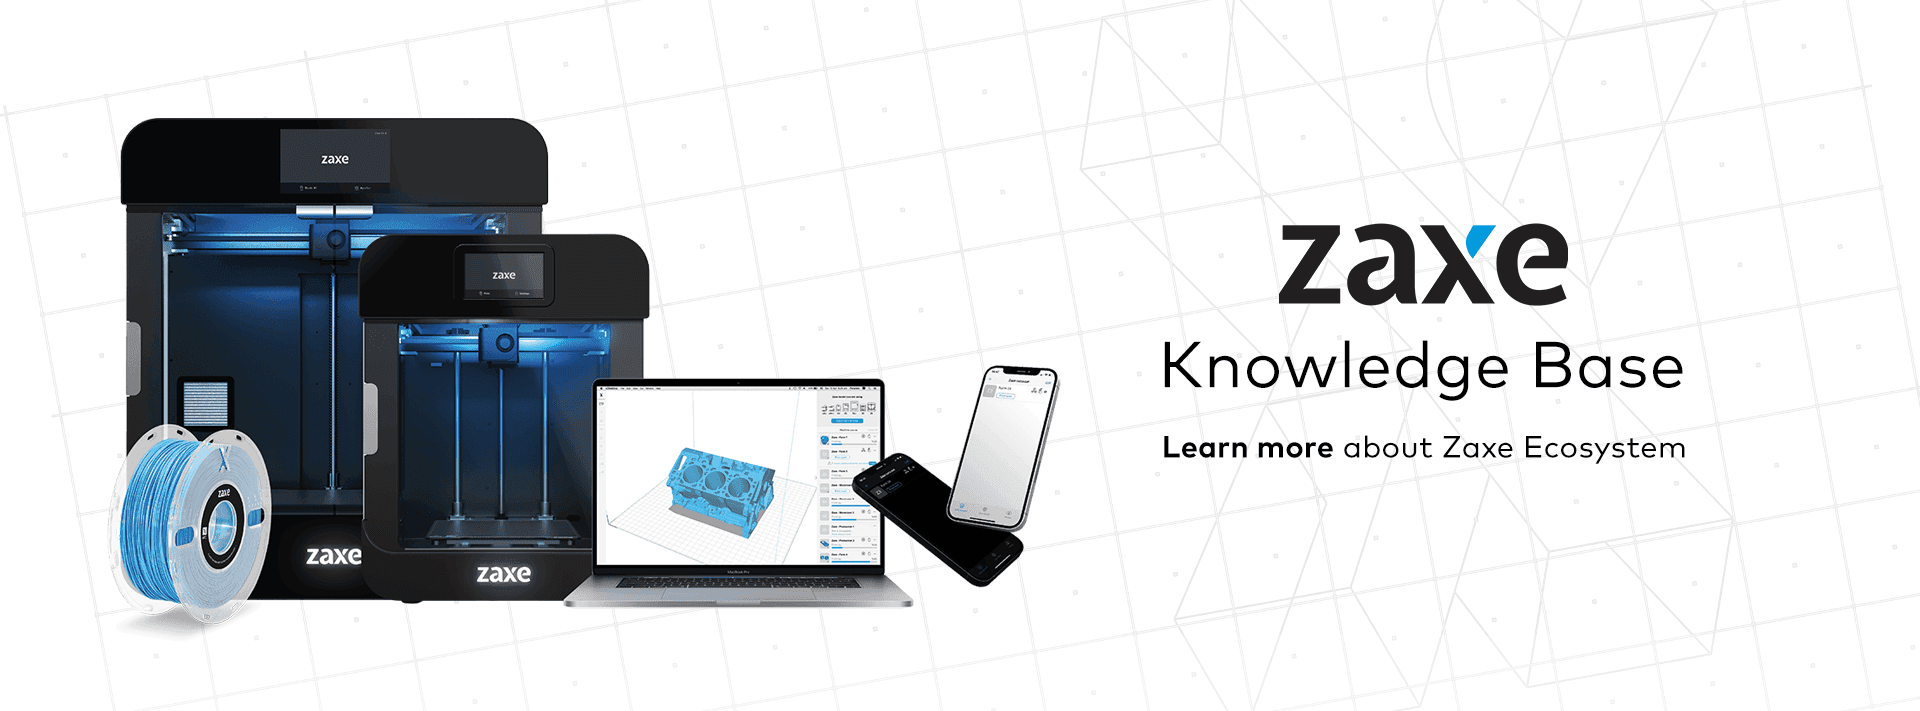 Zaxe - Knowledge Base